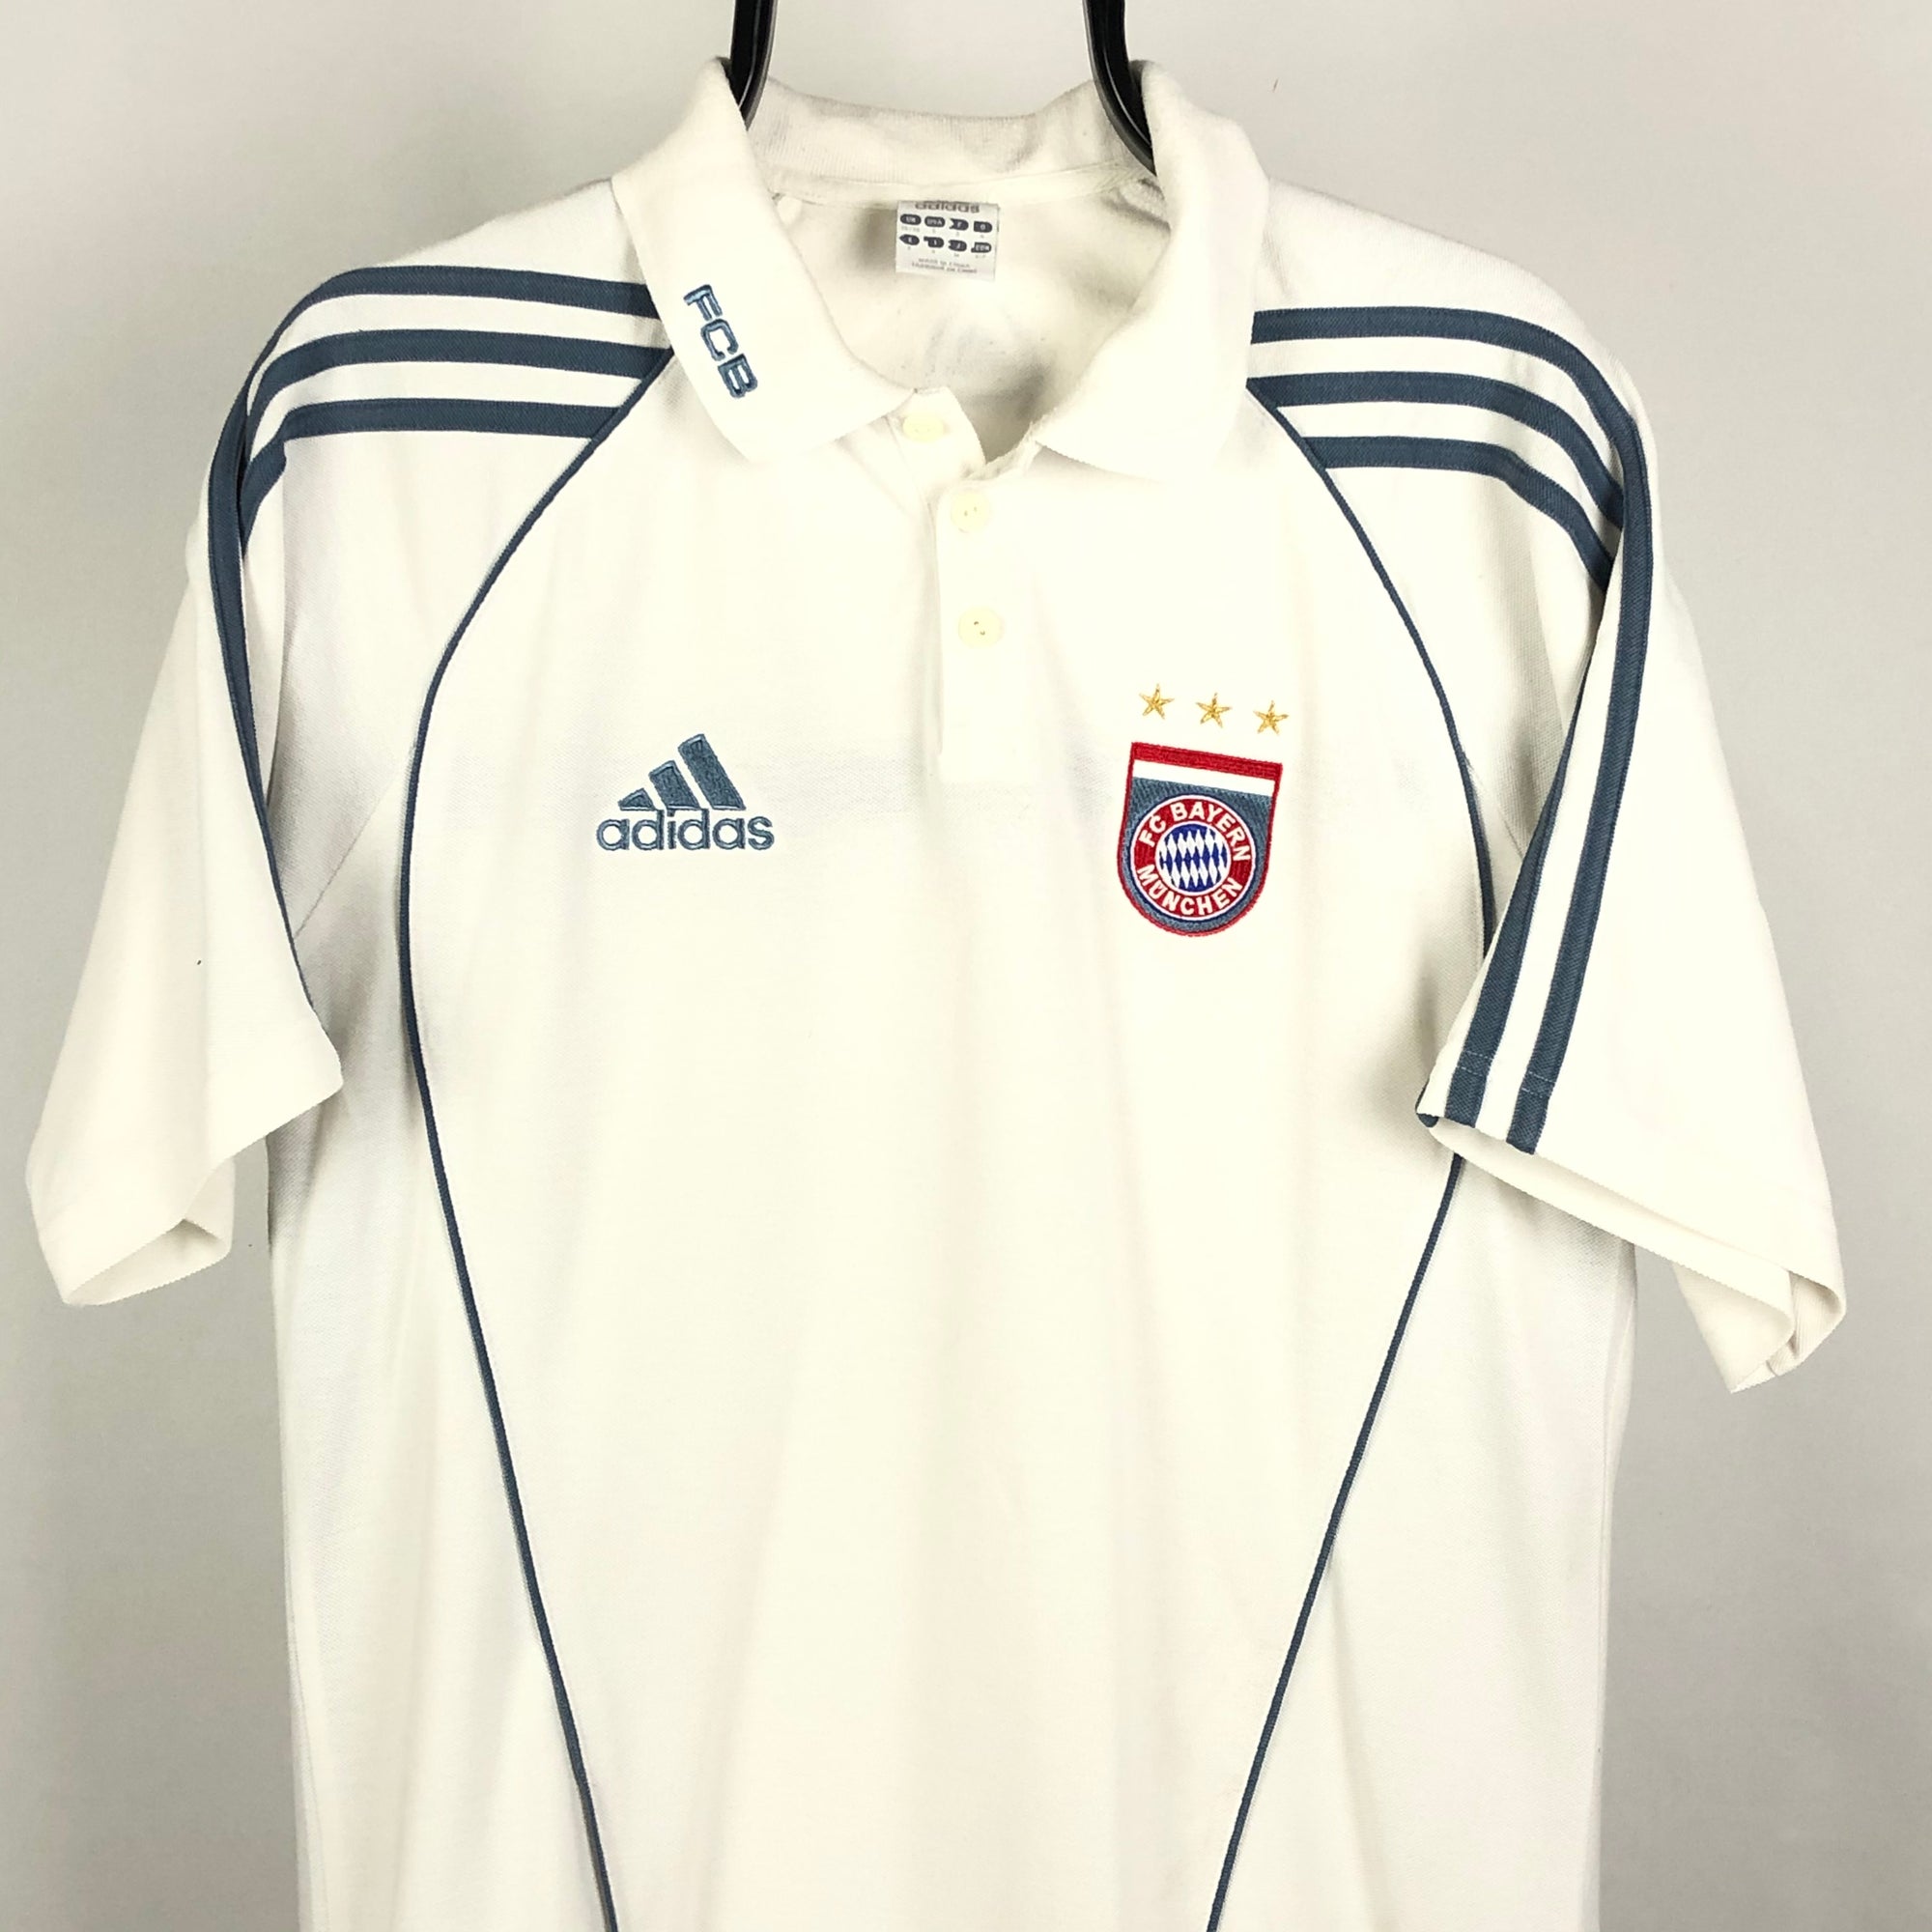 Adidas Bayern Munich Polo Shirt - Men's Medium/Women's Large